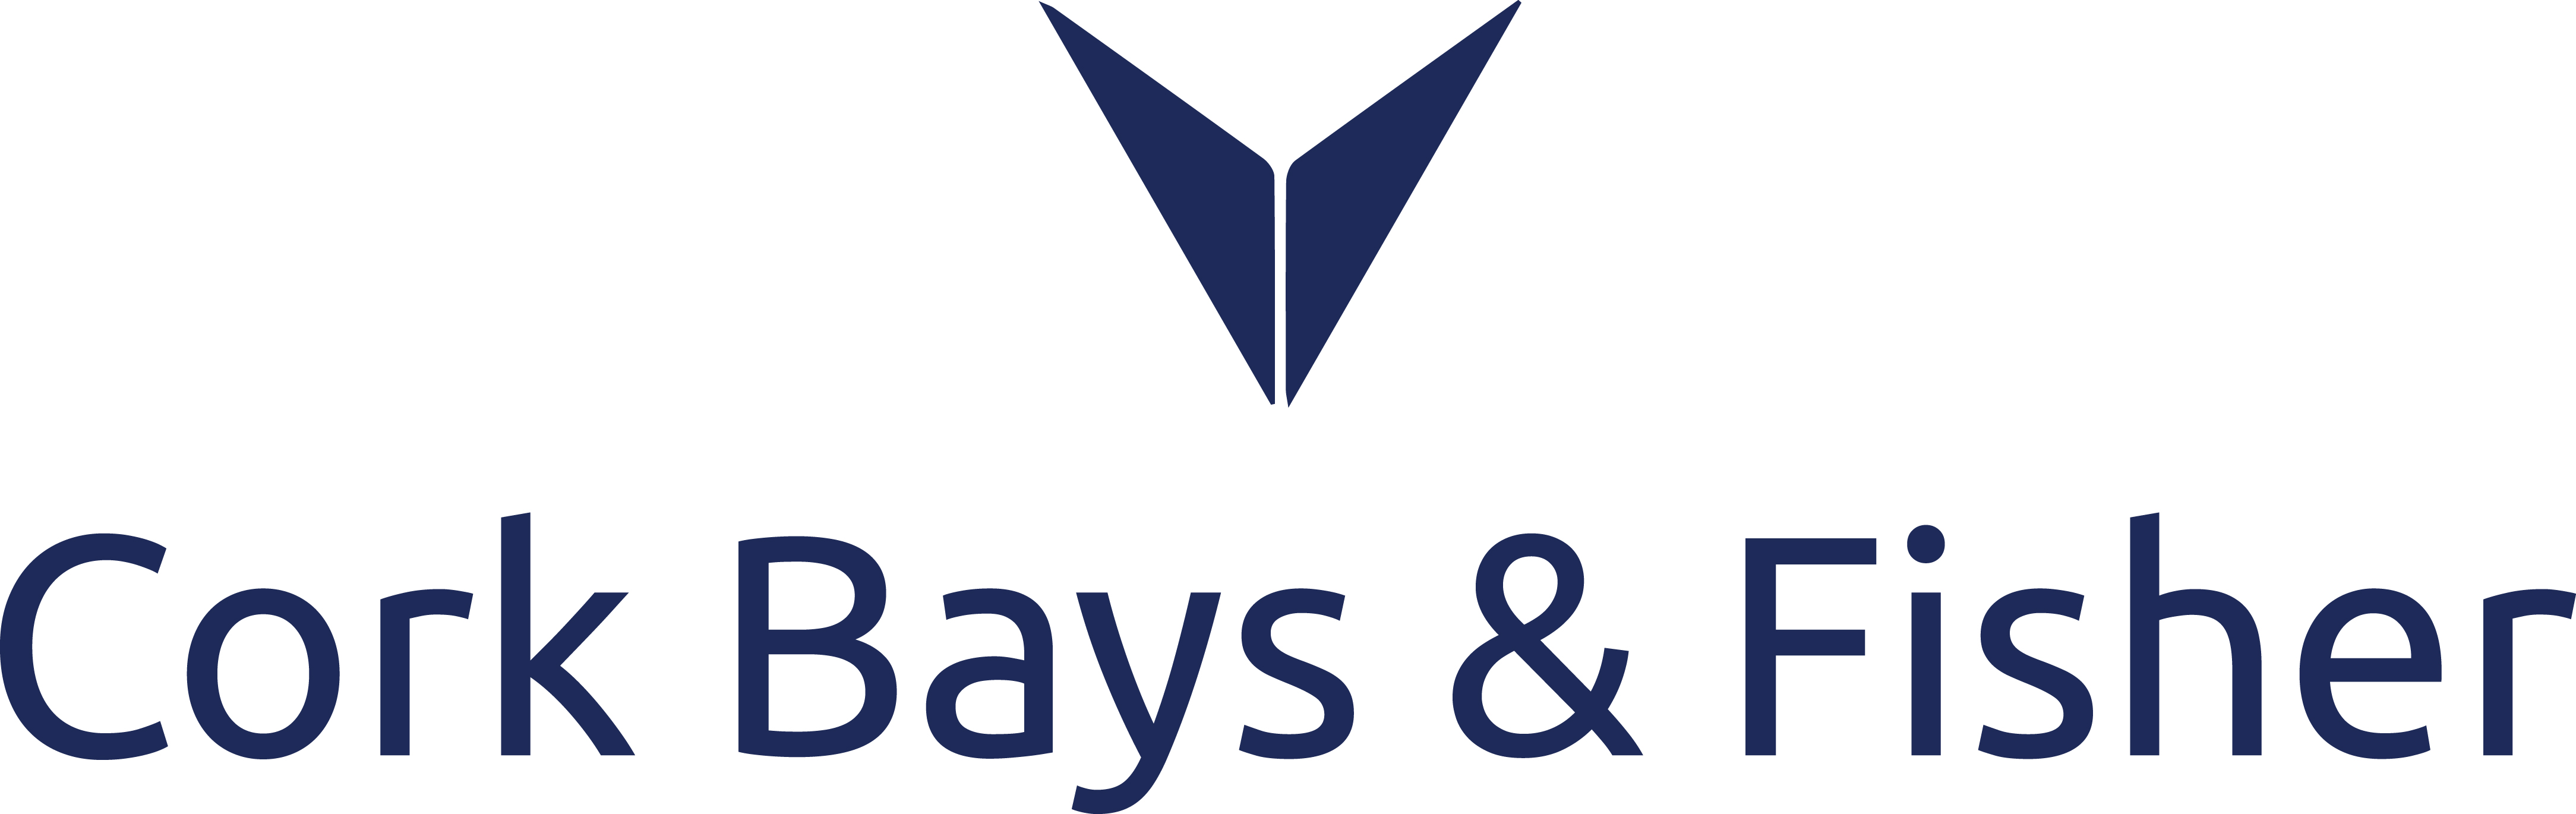 Cork Bays & Fisher logo